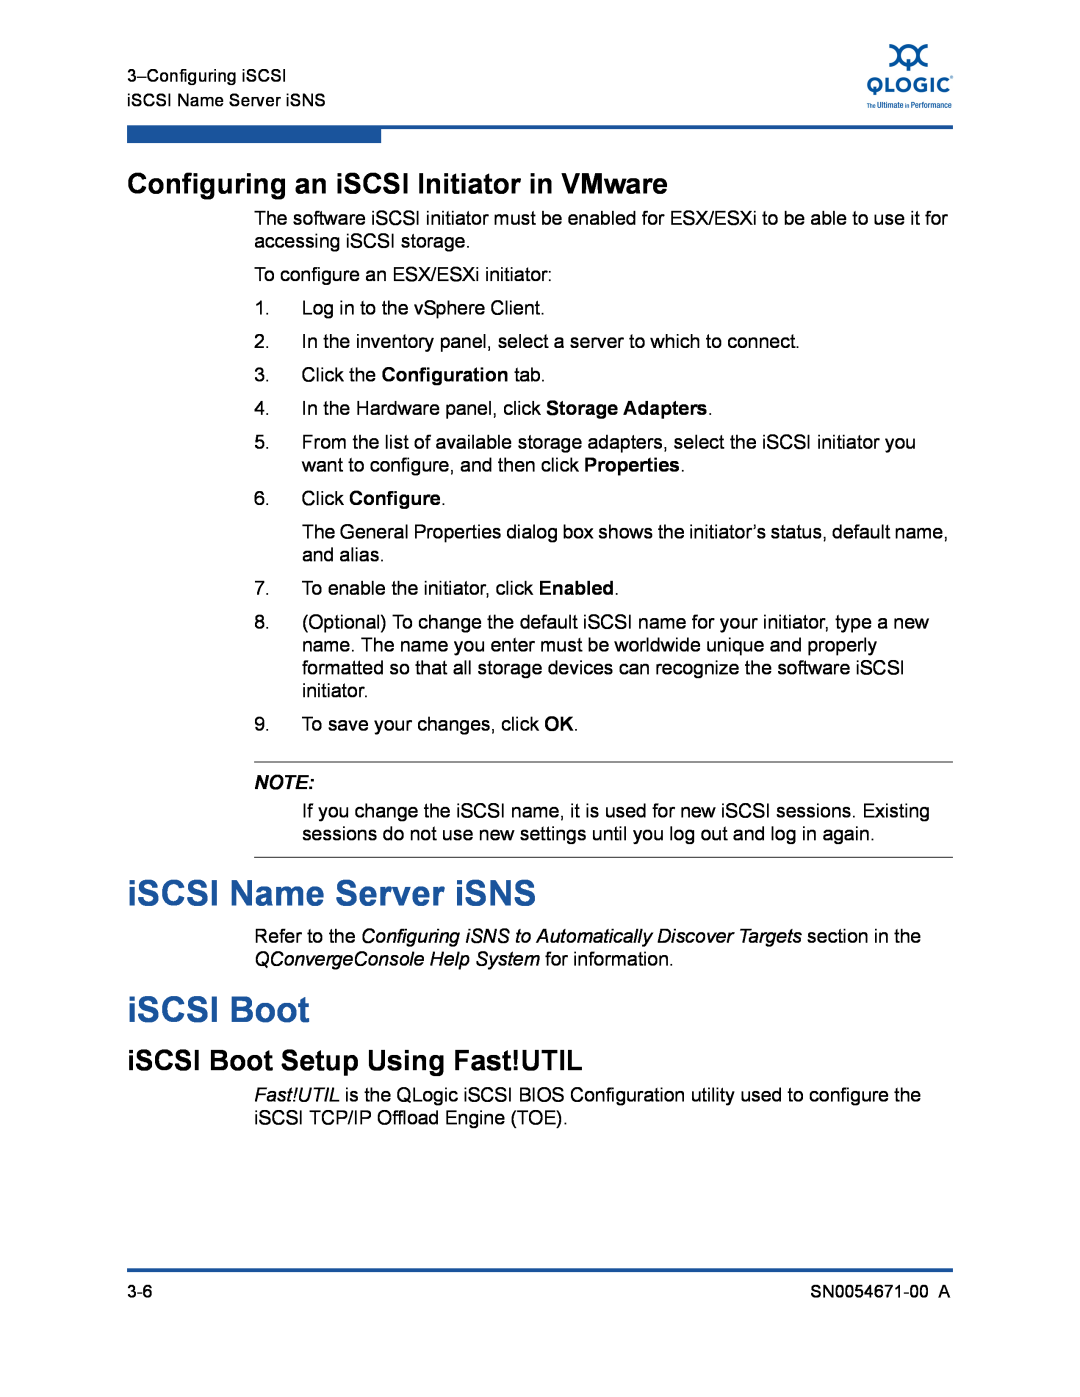 Q-Logic 8200, 3200 manual iSCSI Name Server iSNS, iSCSI Boot, Configuring an iSCSI Initiator in VMware, Click Configure 